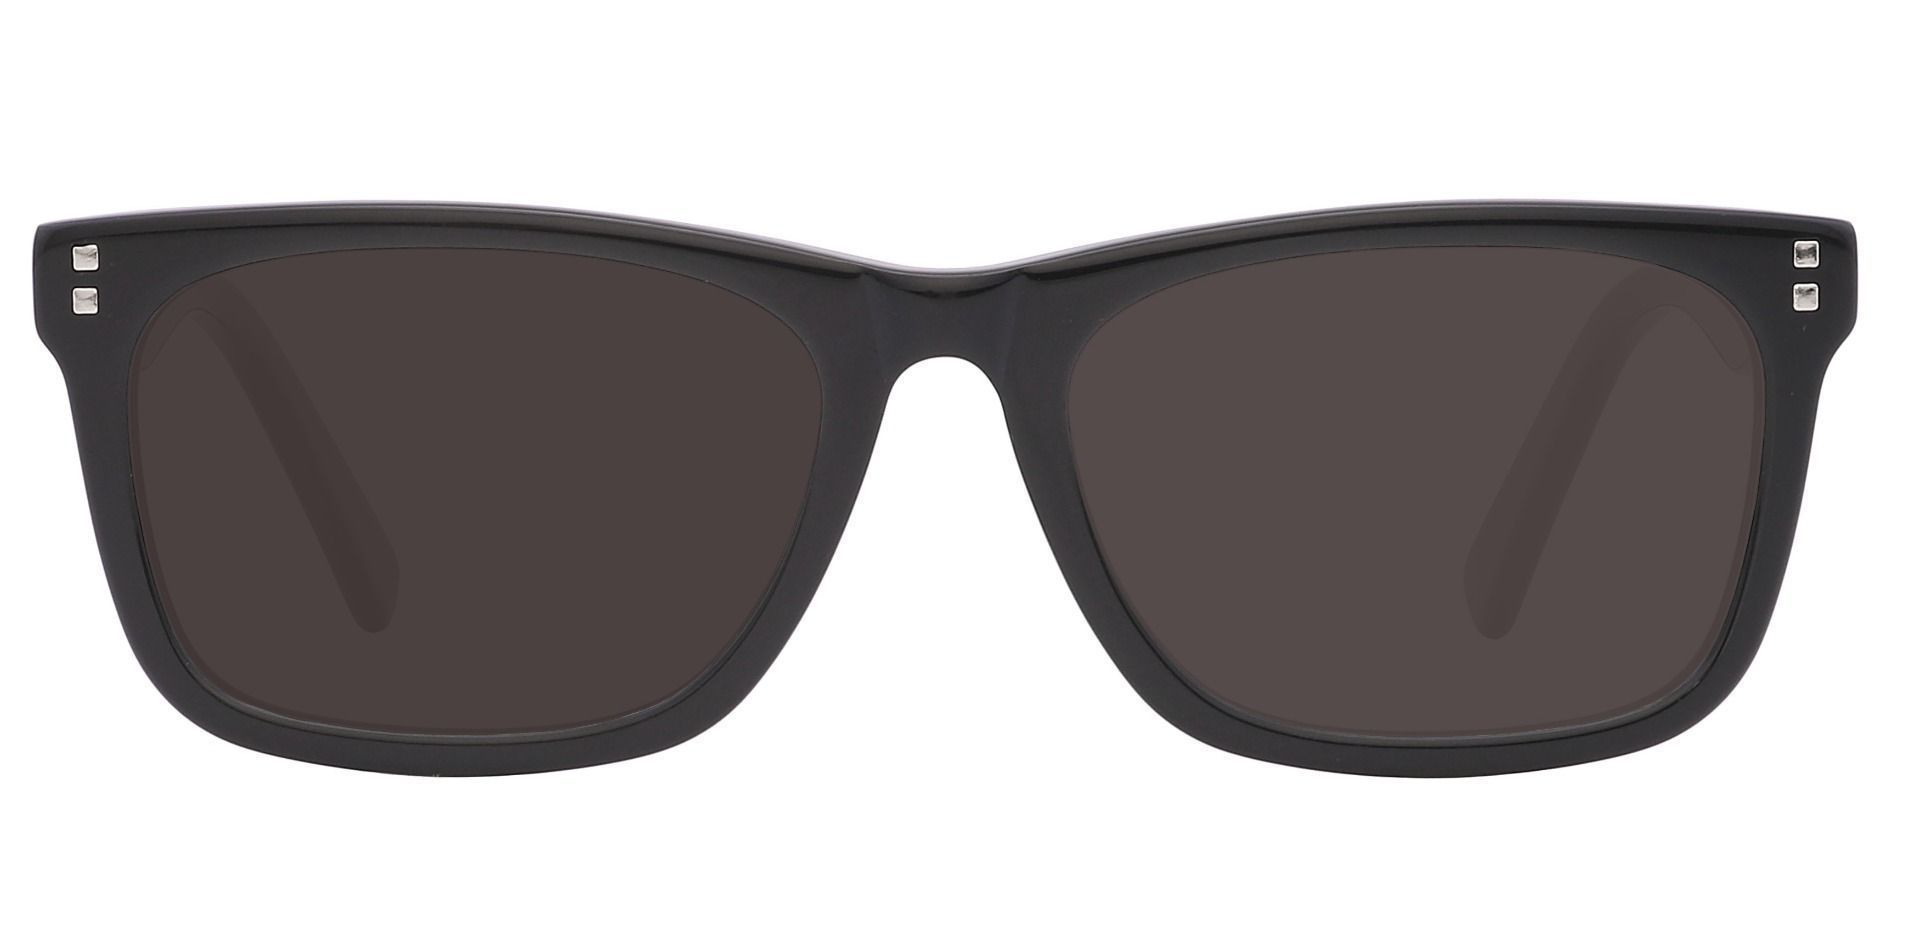 Blitz Rectangle Non-Rx Sunglasses - Black Frame With Gray Lenses